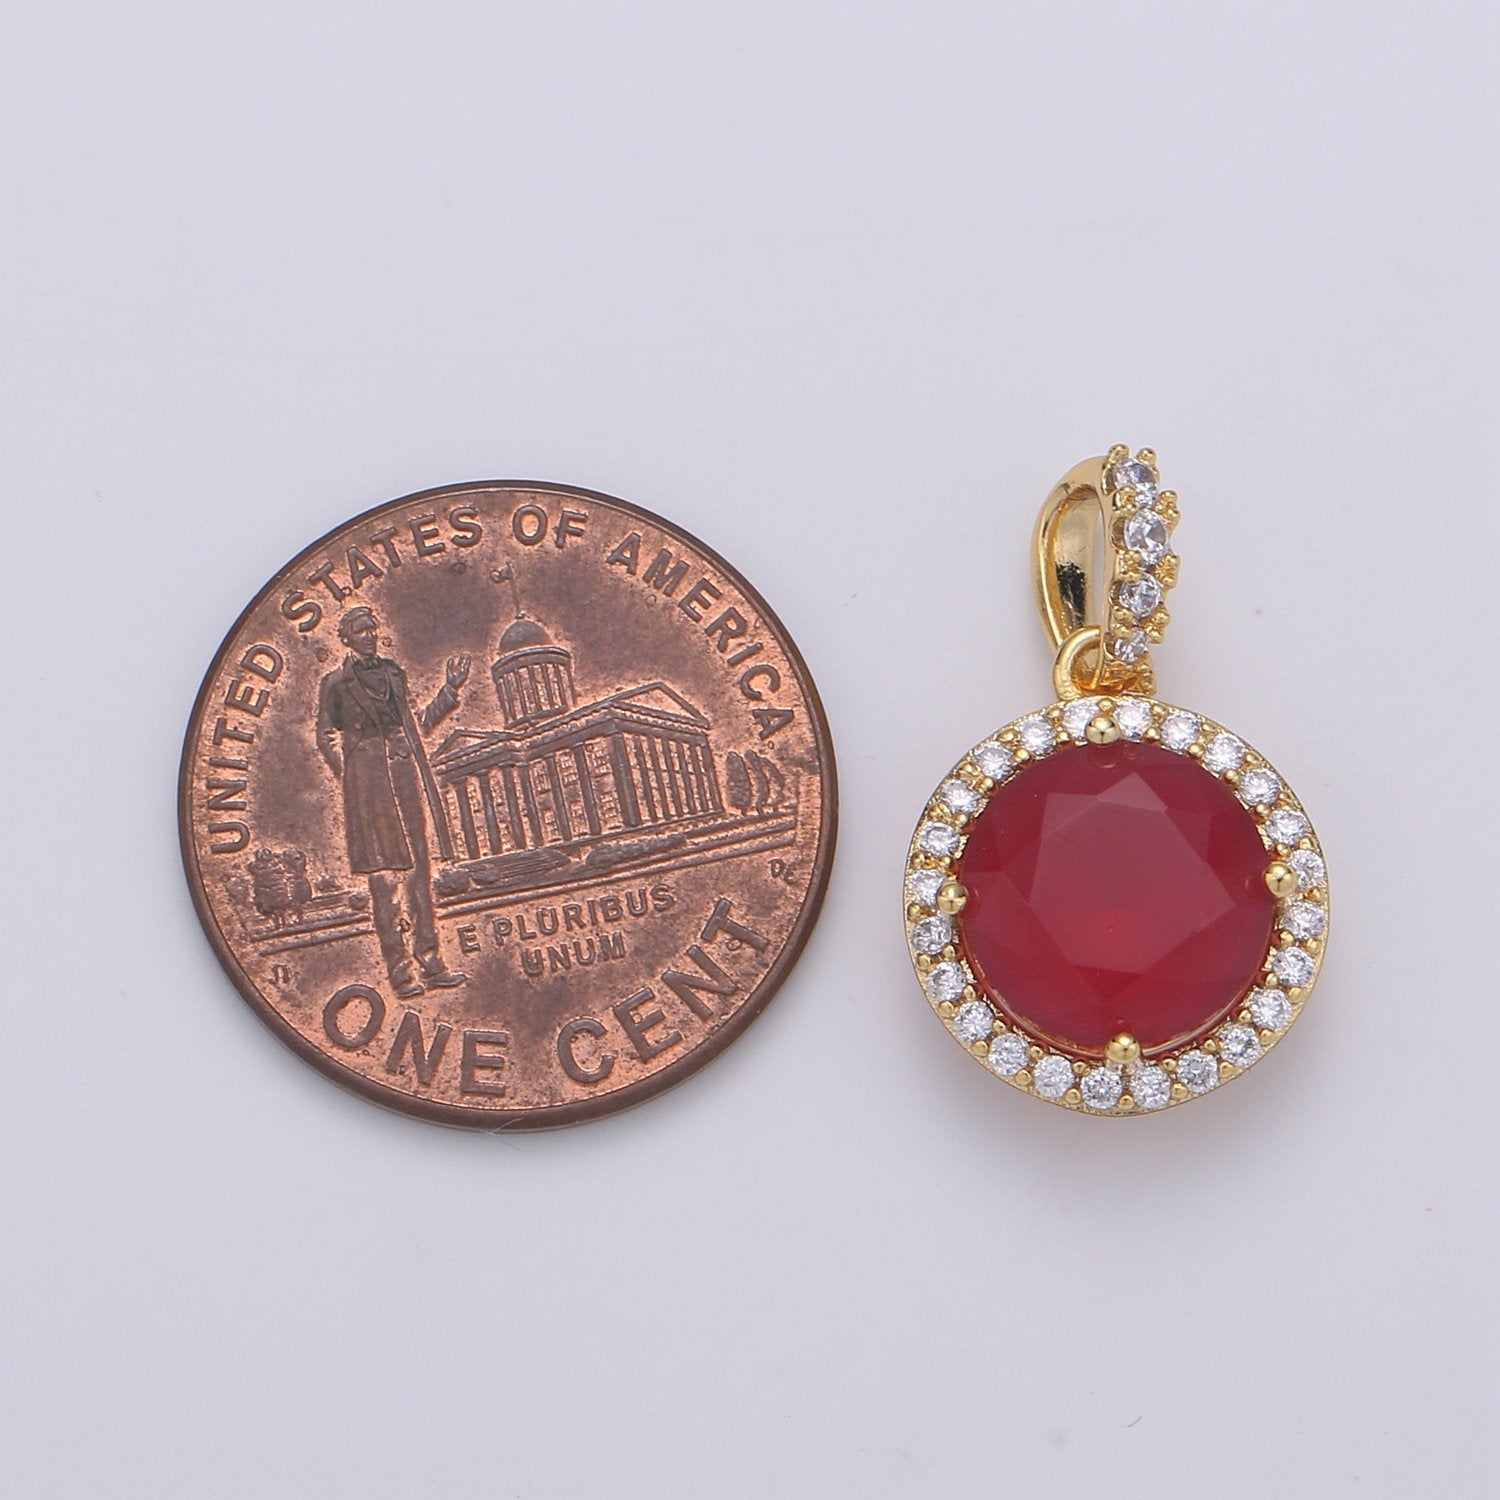 12mm Red Garnet Charm - 24k Gold Filled Charm 19mm x 11mm - Gemstone Bezel Charm - Tiny Red Charm Pendant Bulk Findings Birthstone PD-1993 - DLUXCA